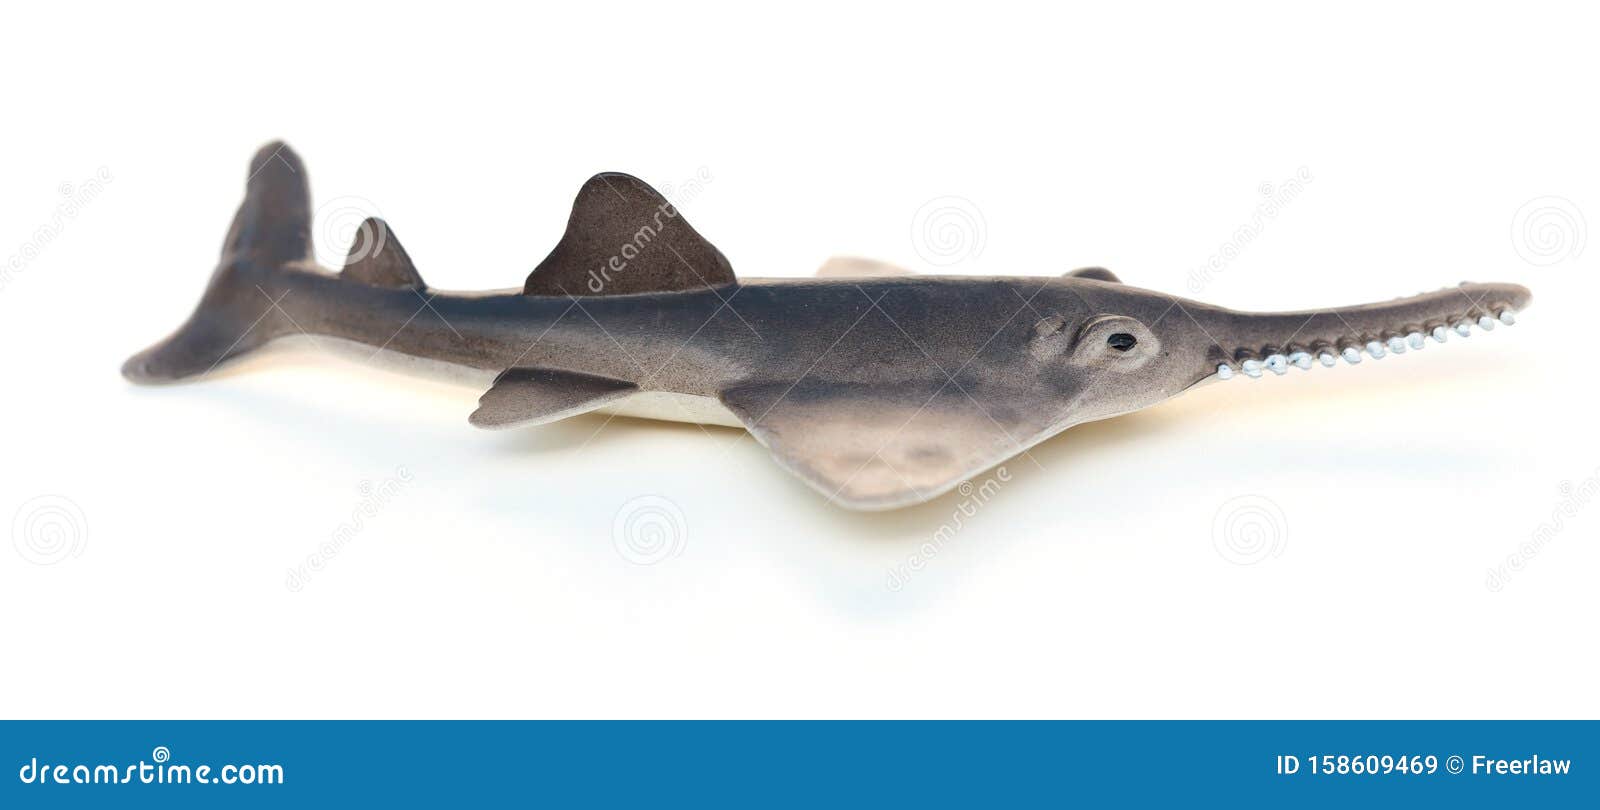 saw shark toy